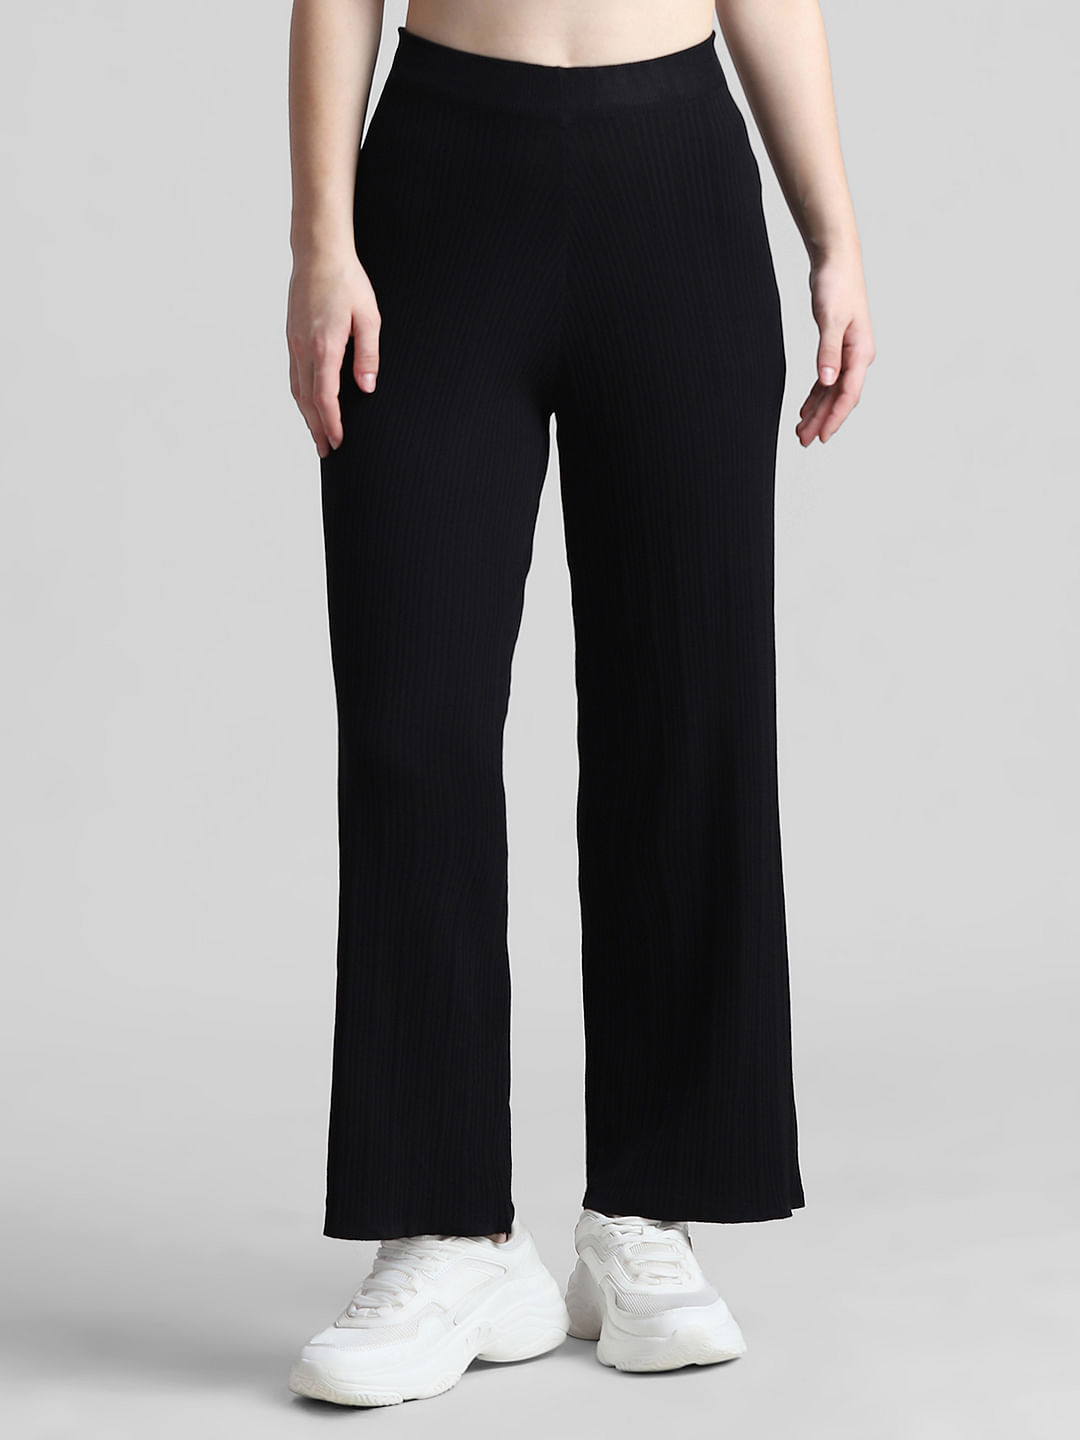 Plus Size Black White Stripe Printed Lounge Pants Online in India | Amydus